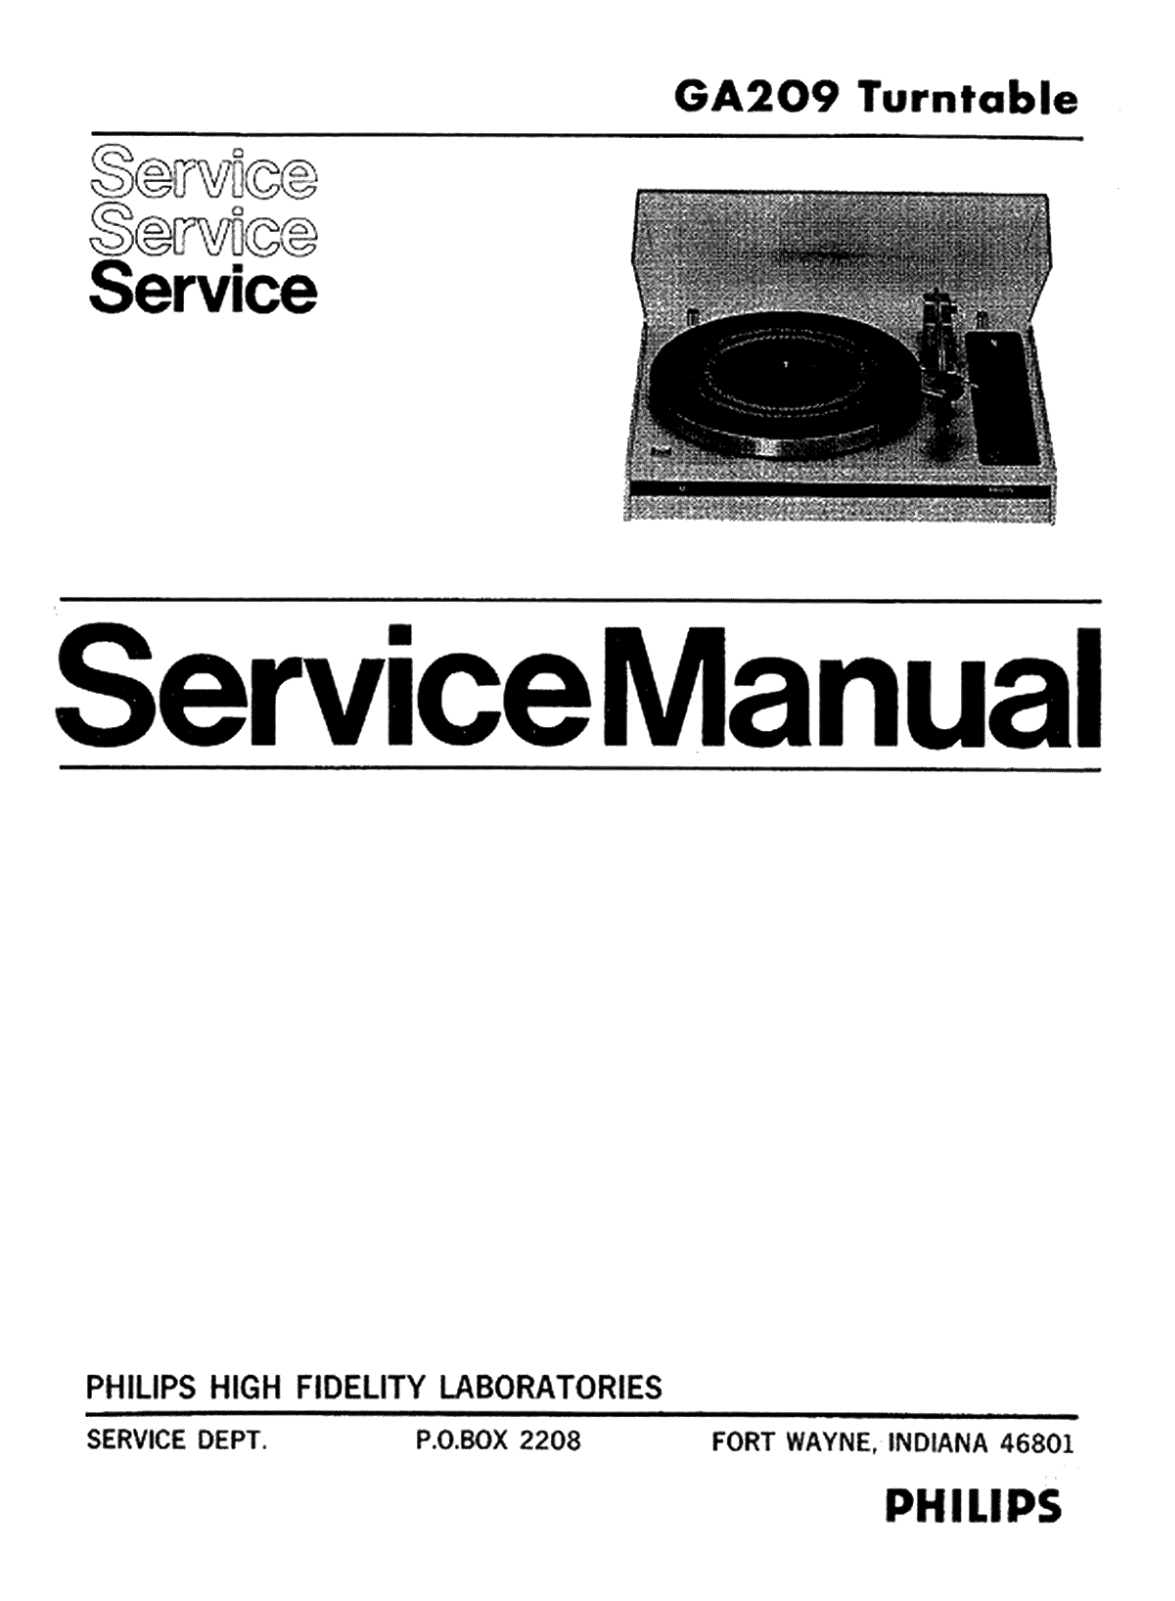 Philips GA-209 Service manual